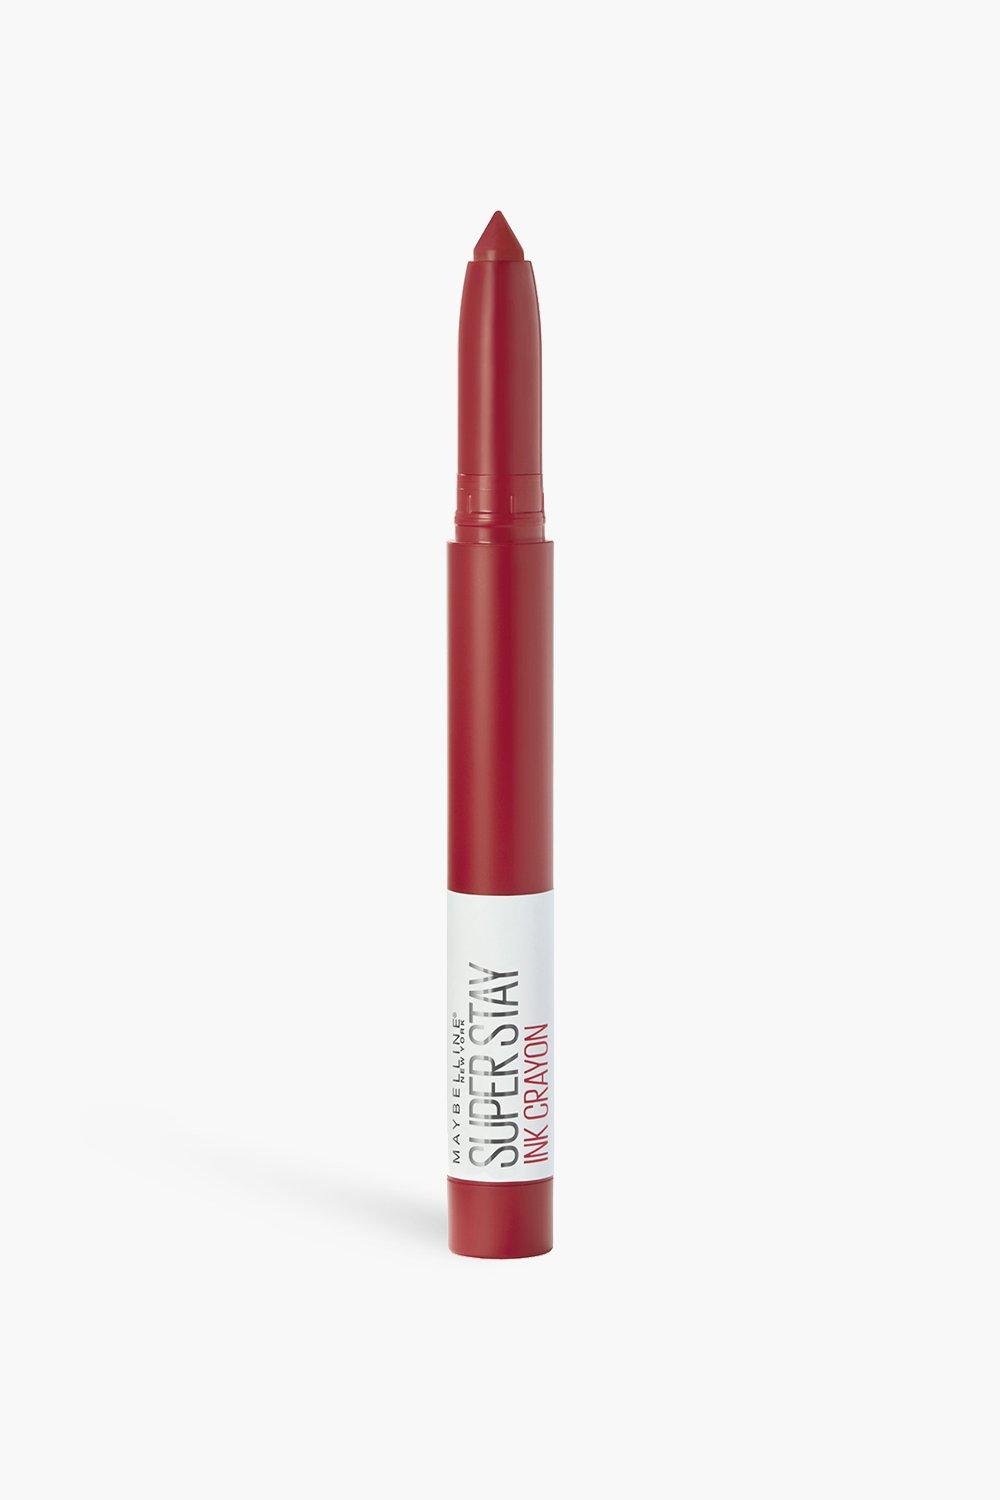 Maybelline Superstay Matte Crayon Lipstick, 45 Hustle In Heels